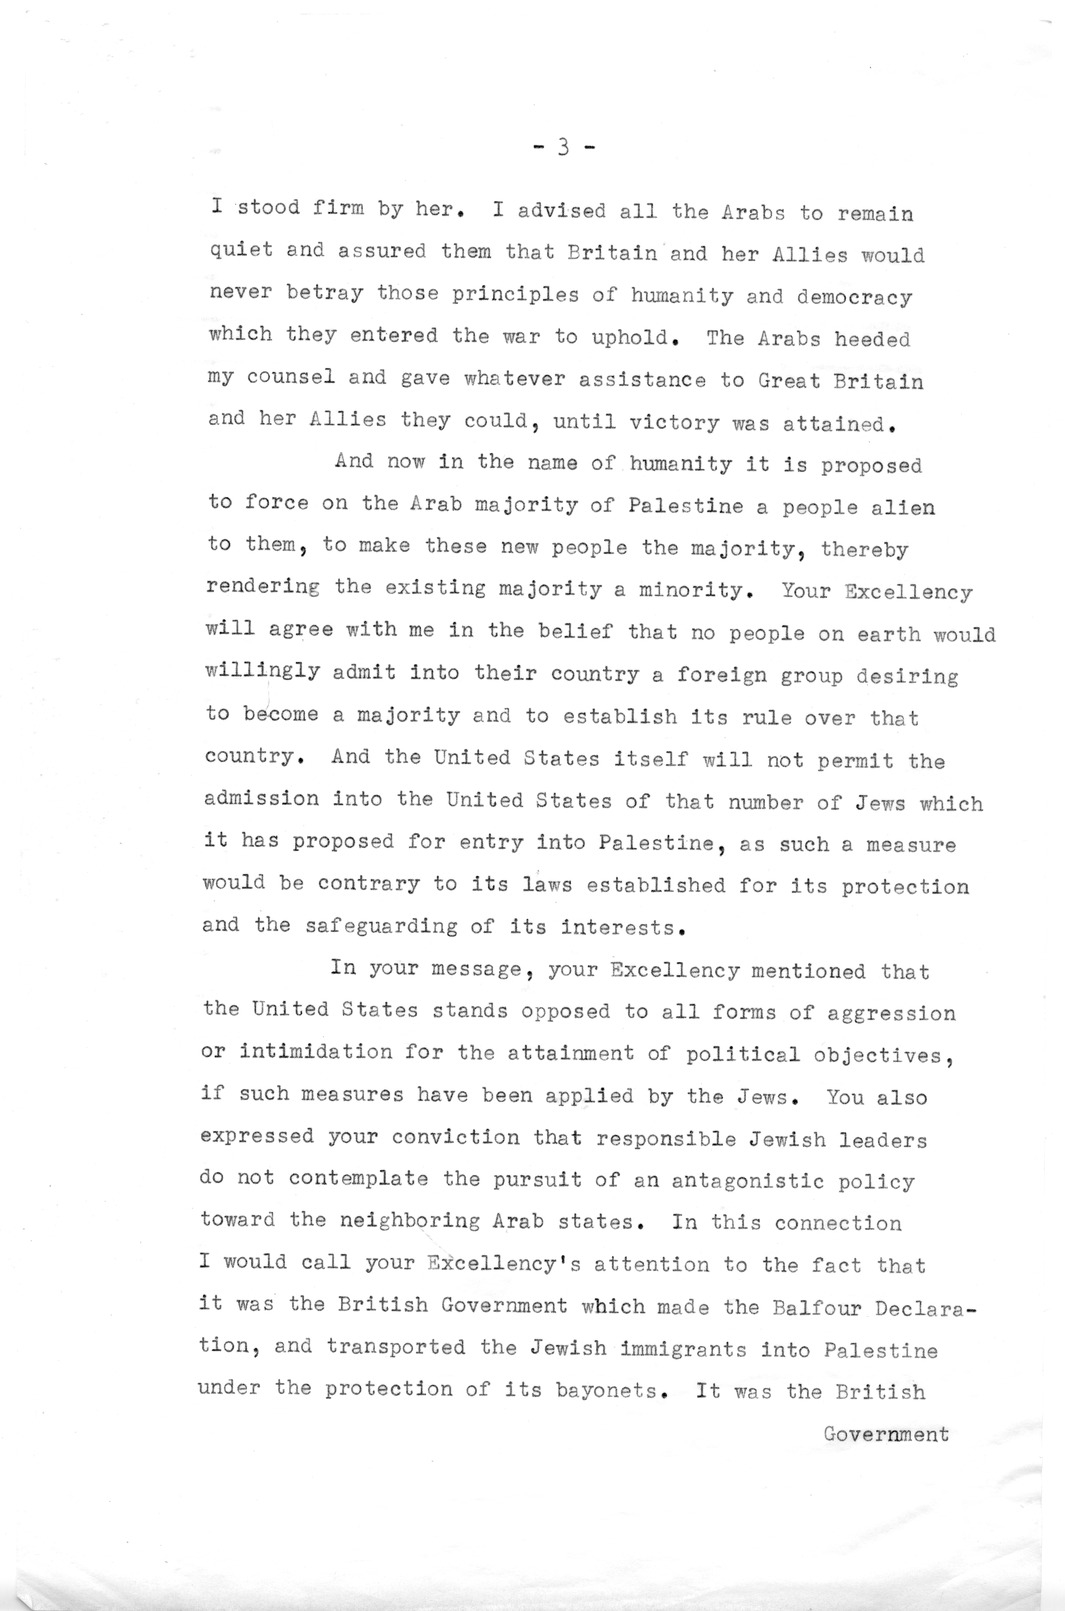 Correspondence Between President Harry S. Truman and King Ibn Saud of Saudi Arabia